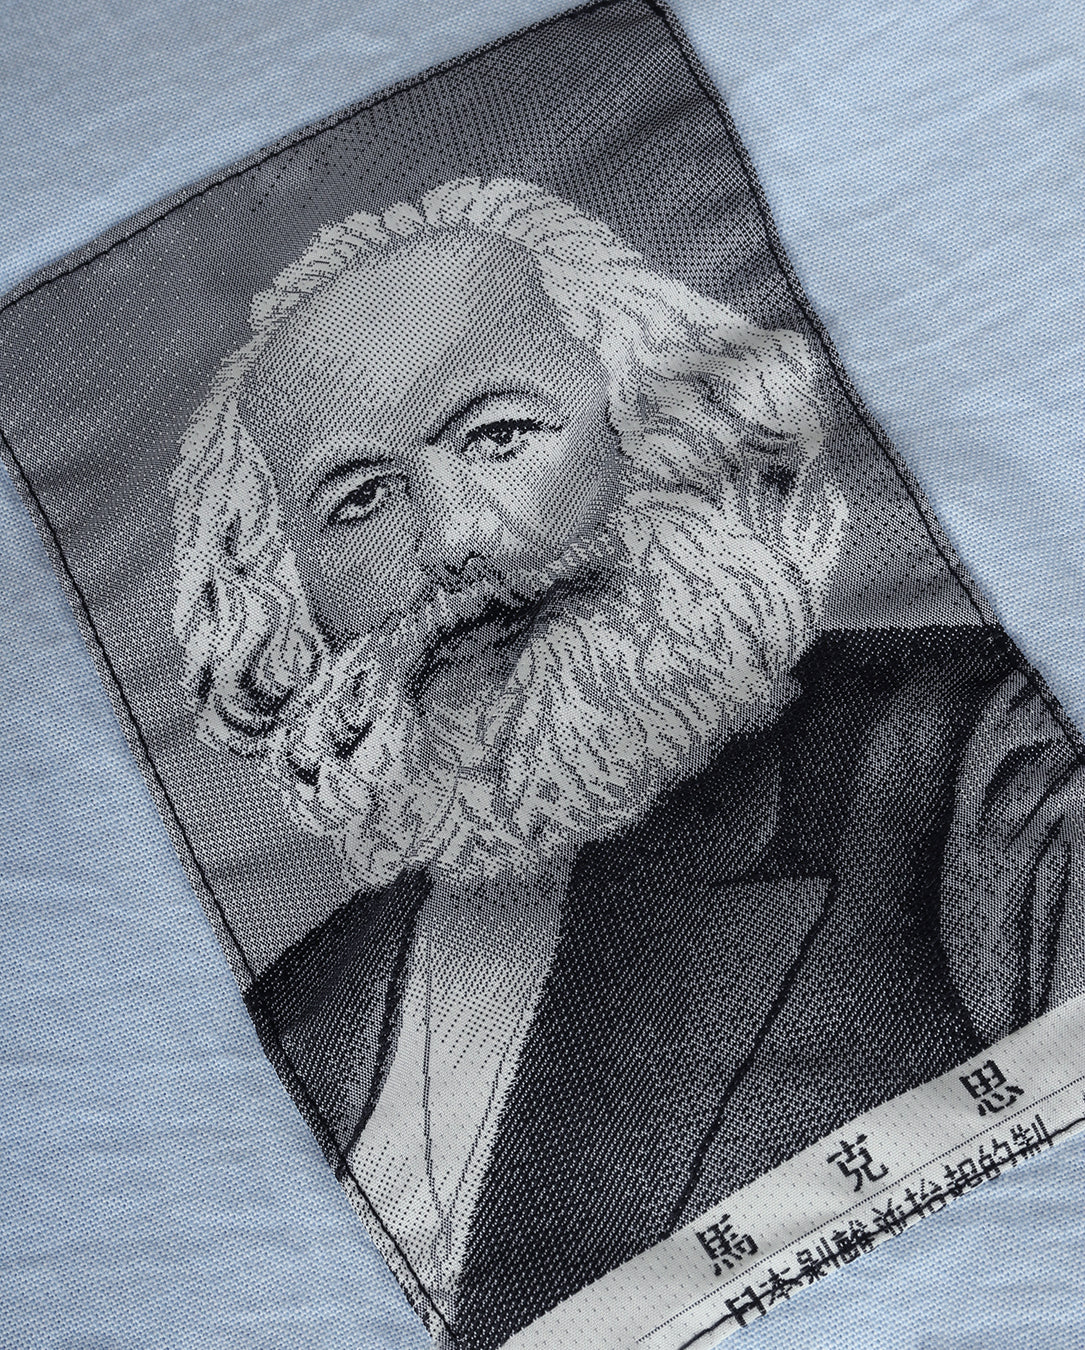 Marx Shirt blue